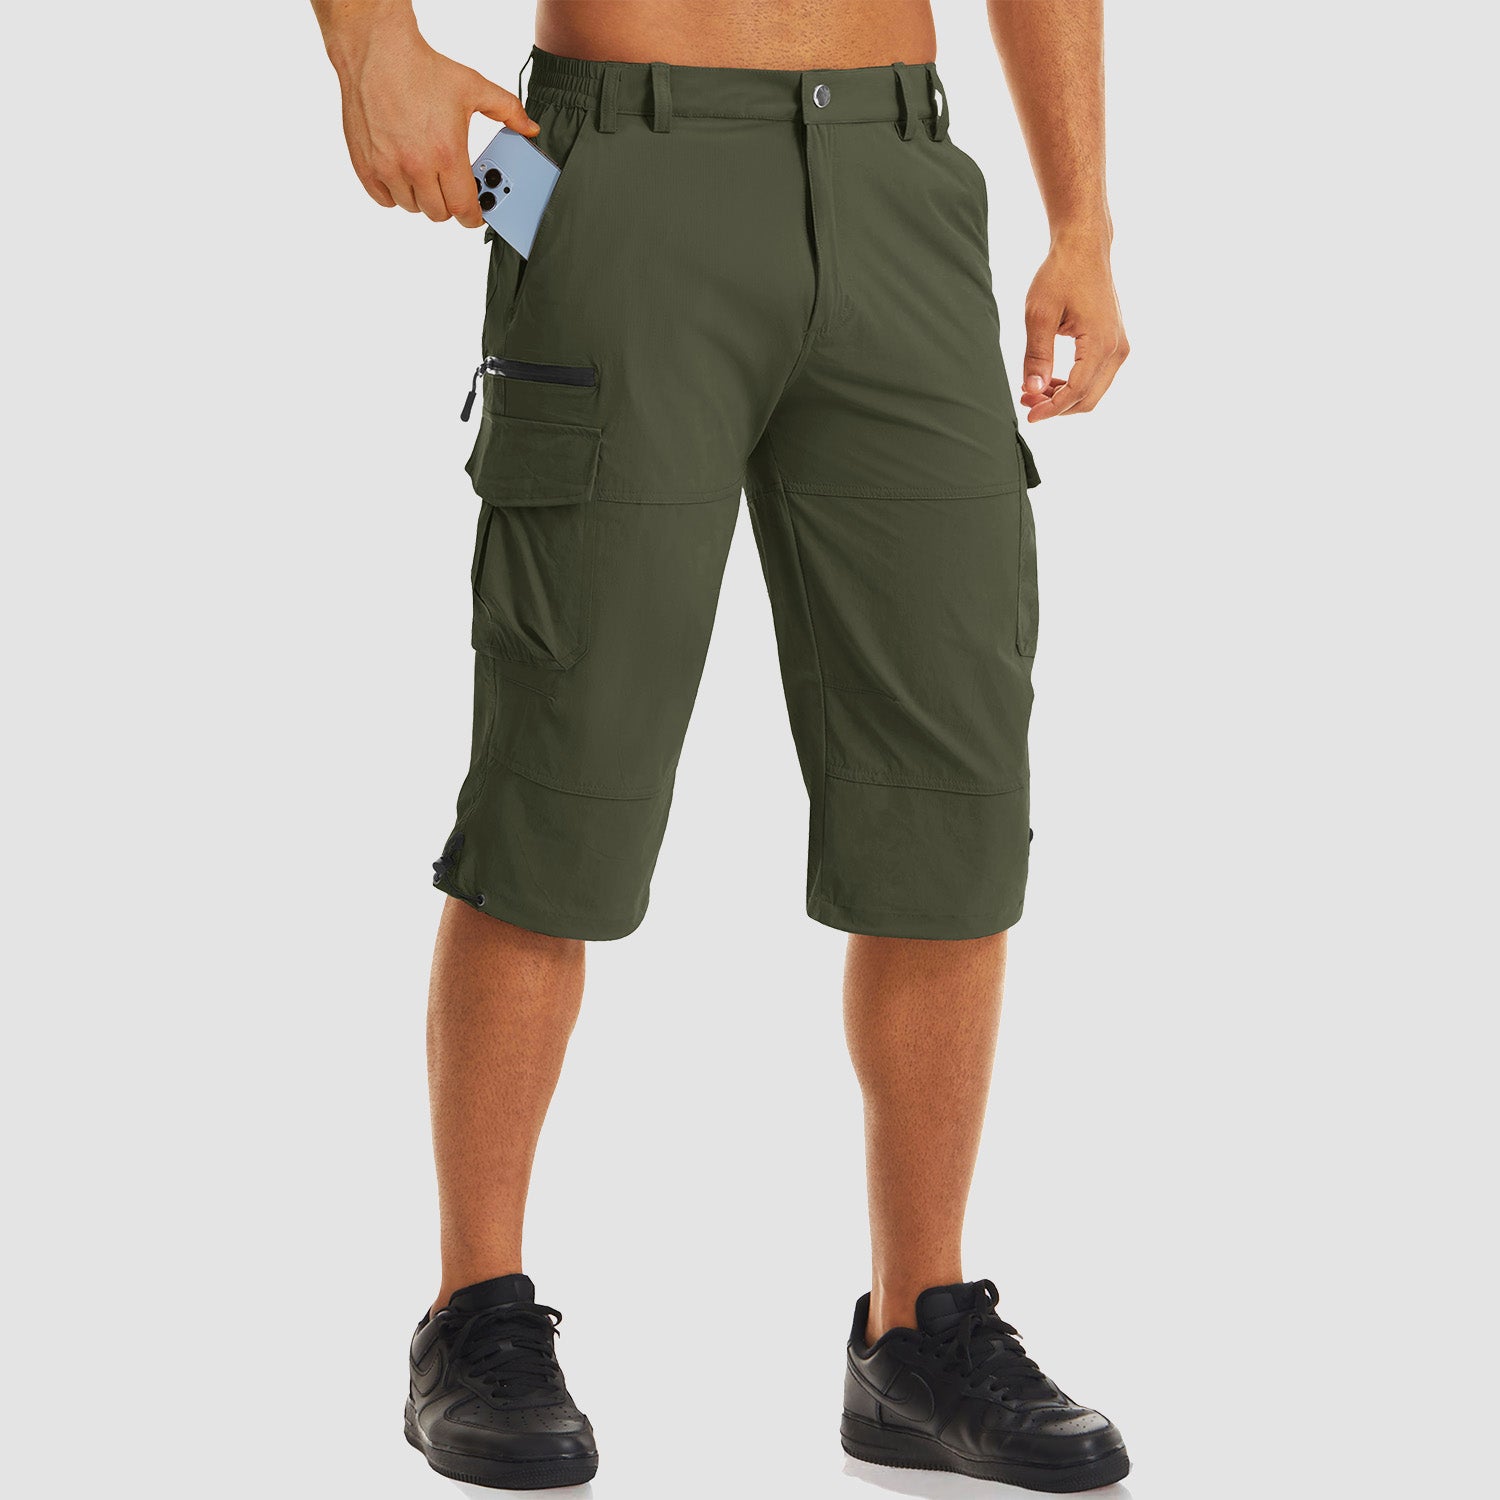 Men 3/4 Leggings Fitness Compression Sports Tights Base Layer Yoga Pants -  Walmart.com